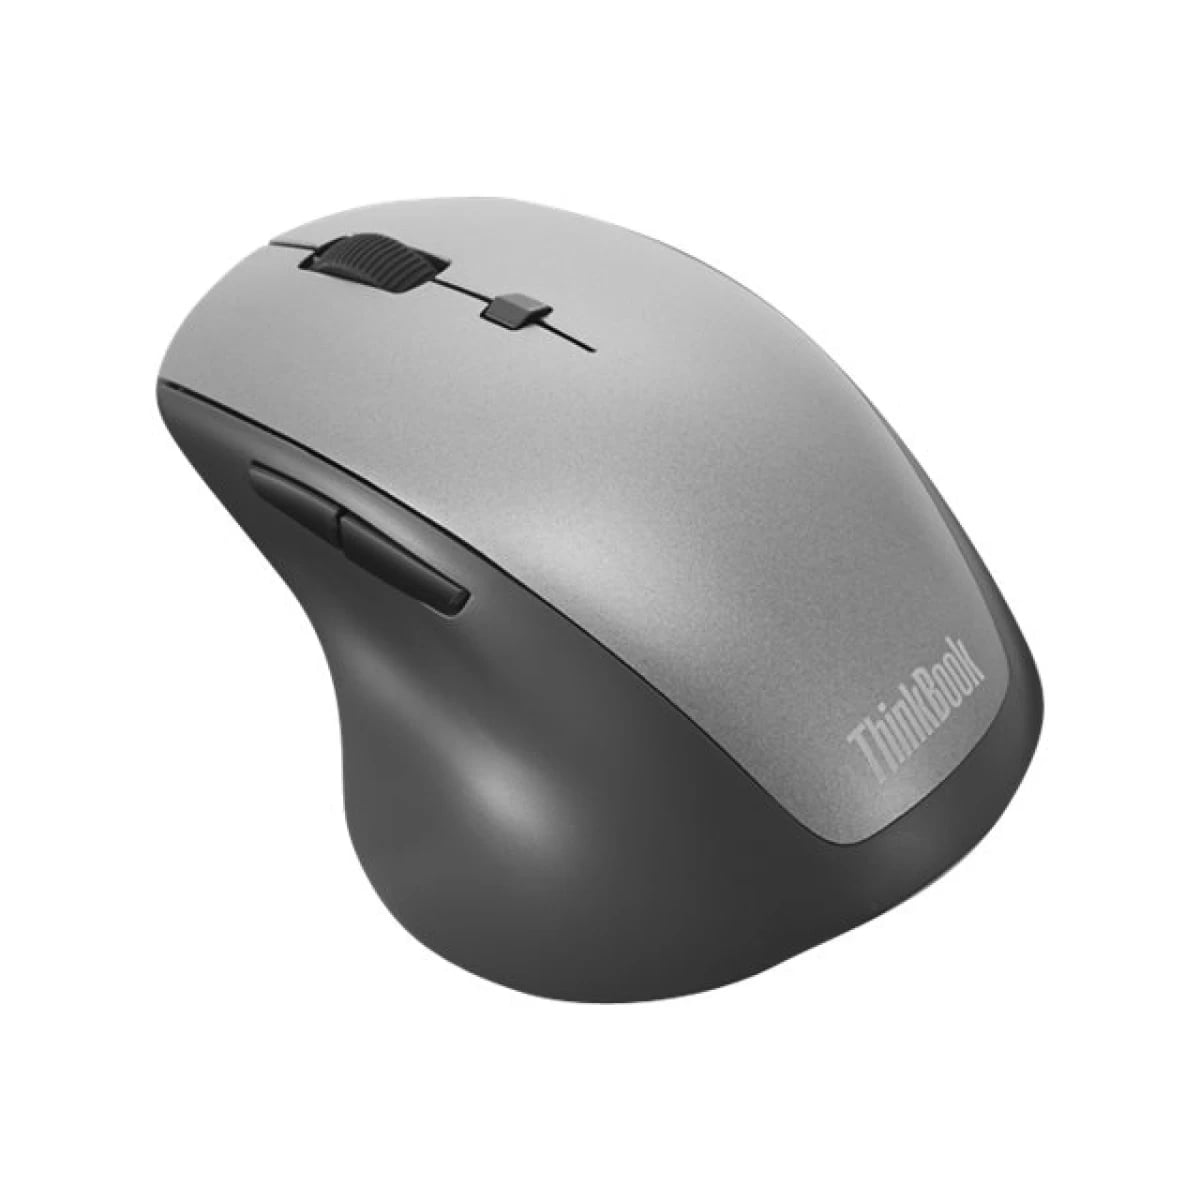 Lenovo Wireless Media Mouse 600 with 3 Adjustable DPI Levels